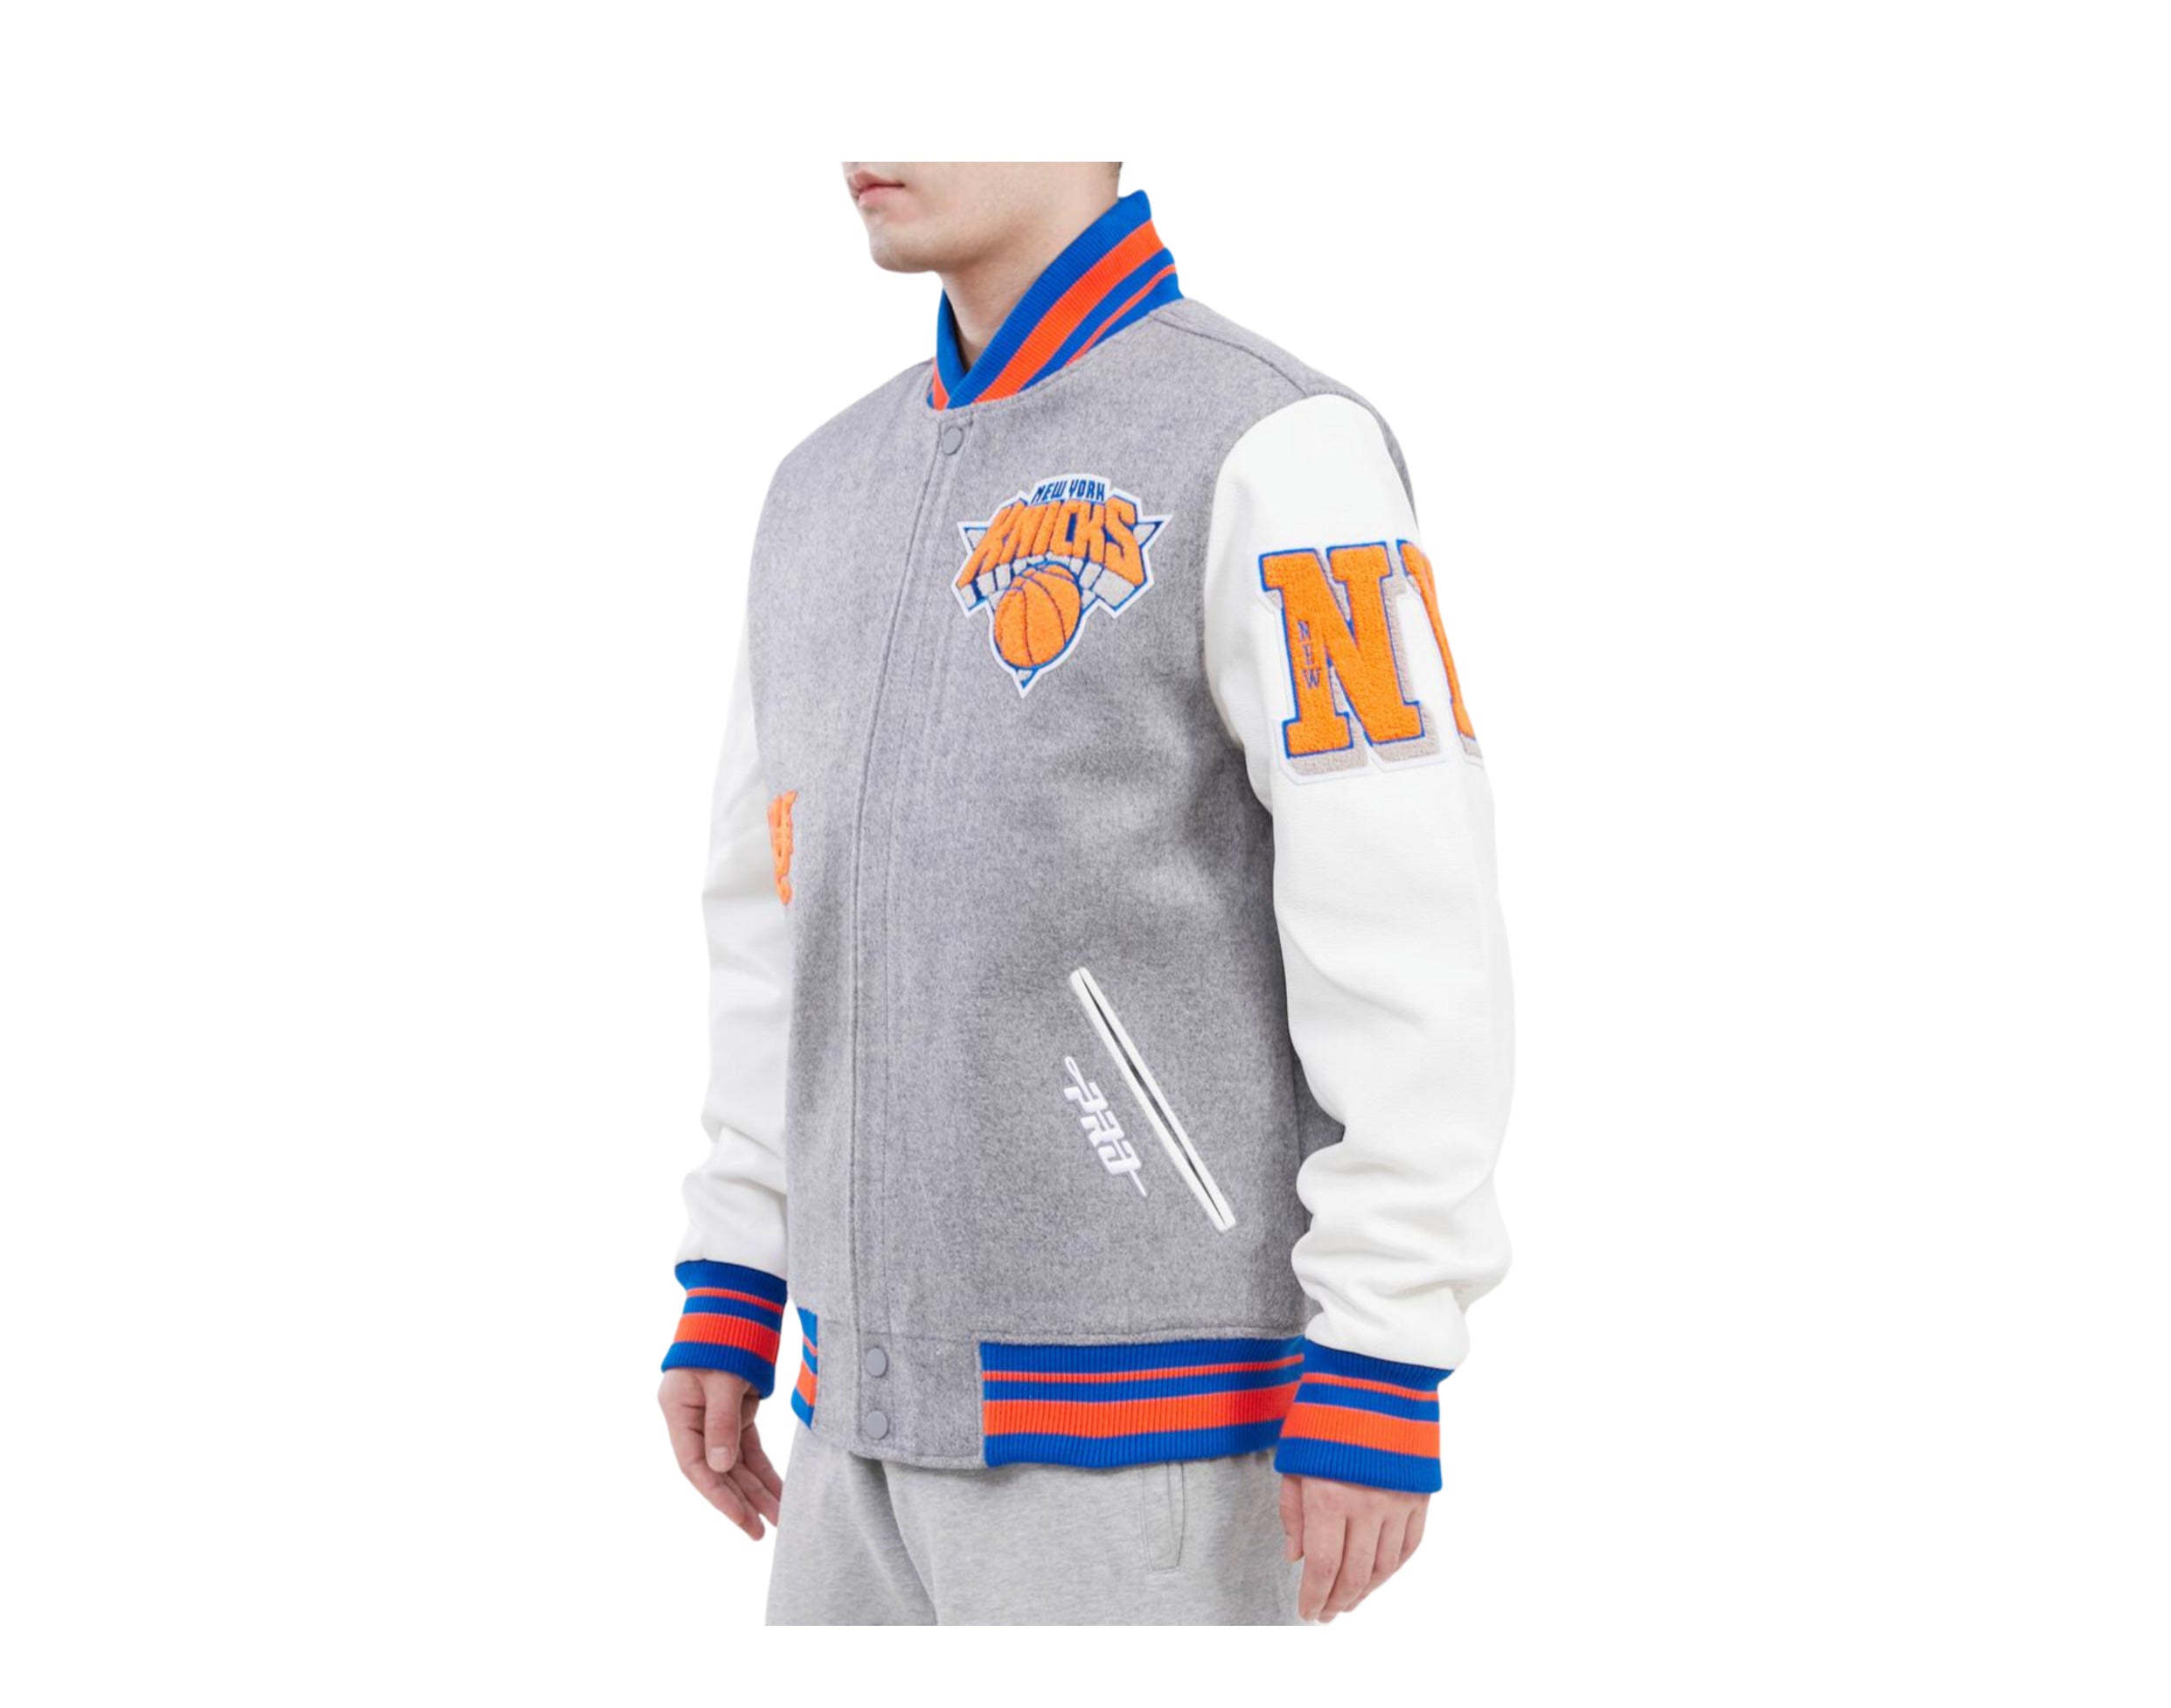 VTG New York Knicks Basketball Adidas NBA Team Jacket Mens 2XL